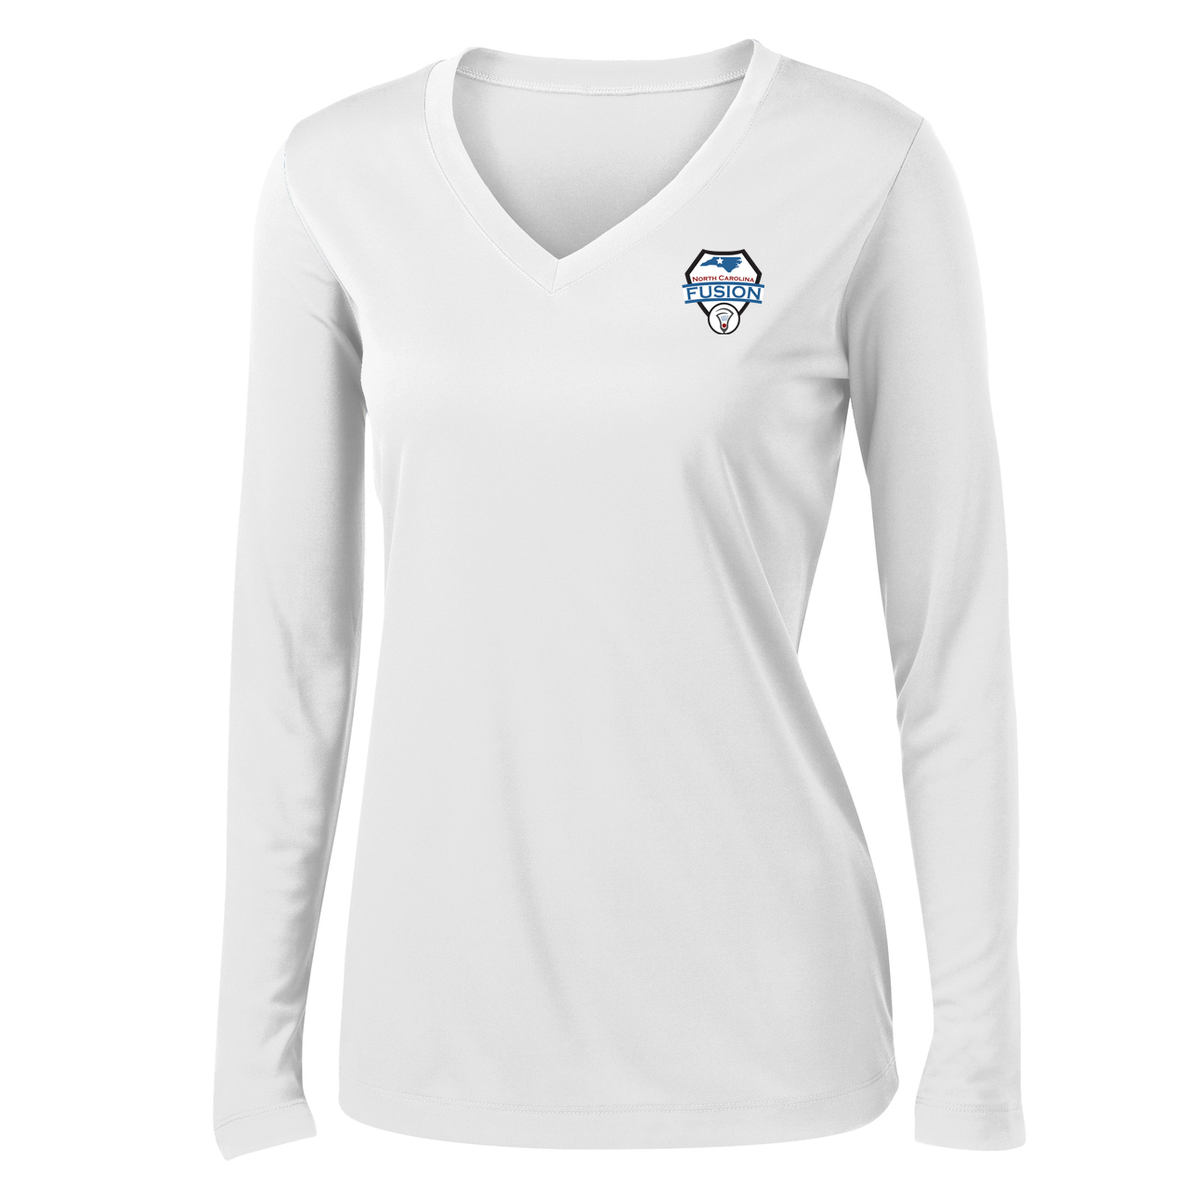 Fusion Lacrosse Women's Long Sleeve Performance Shirt